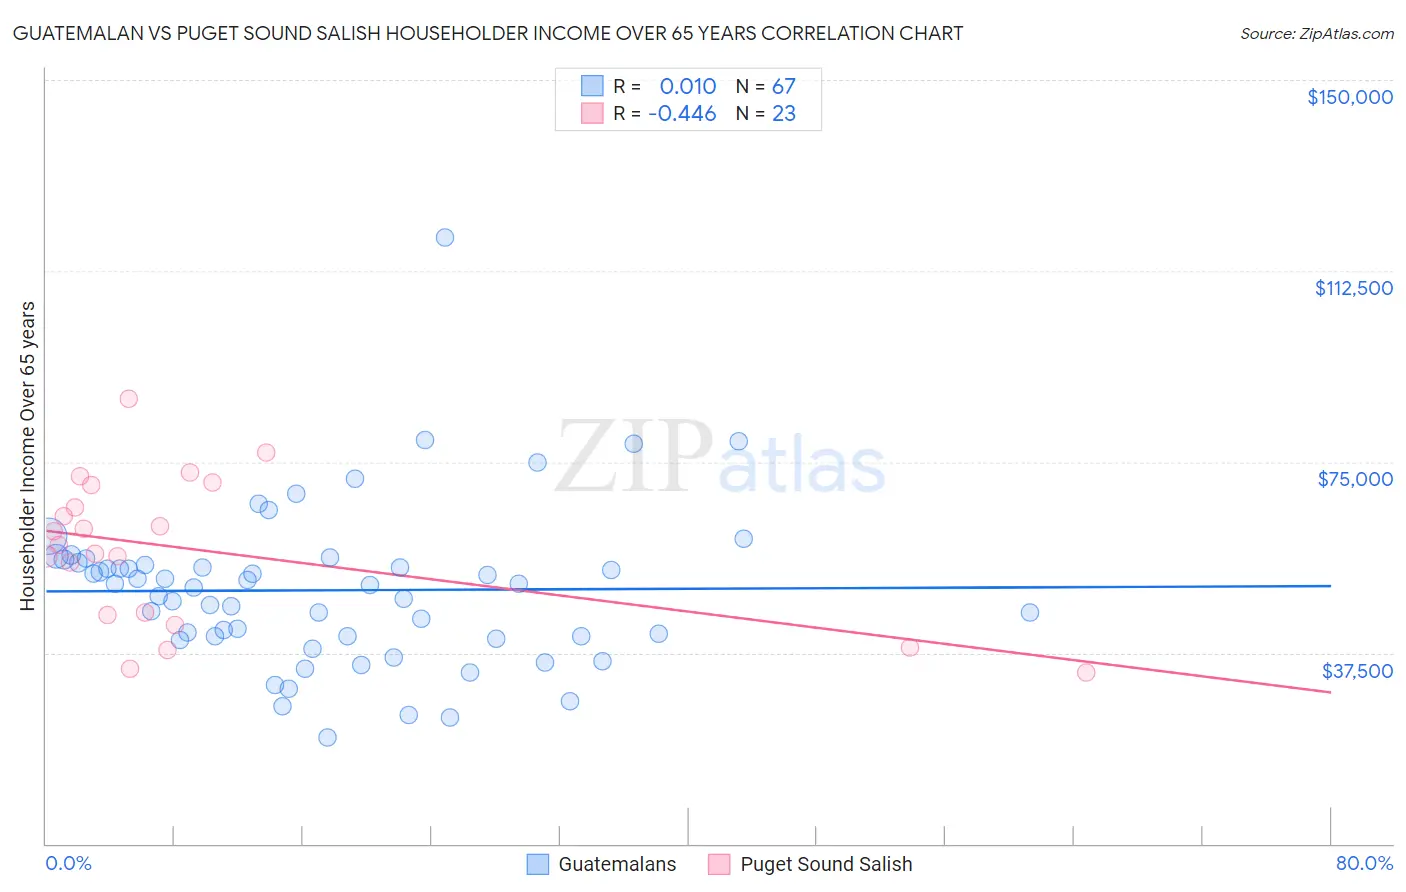 Guatemalan vs Puget Sound Salish Householder Income Over 65 years